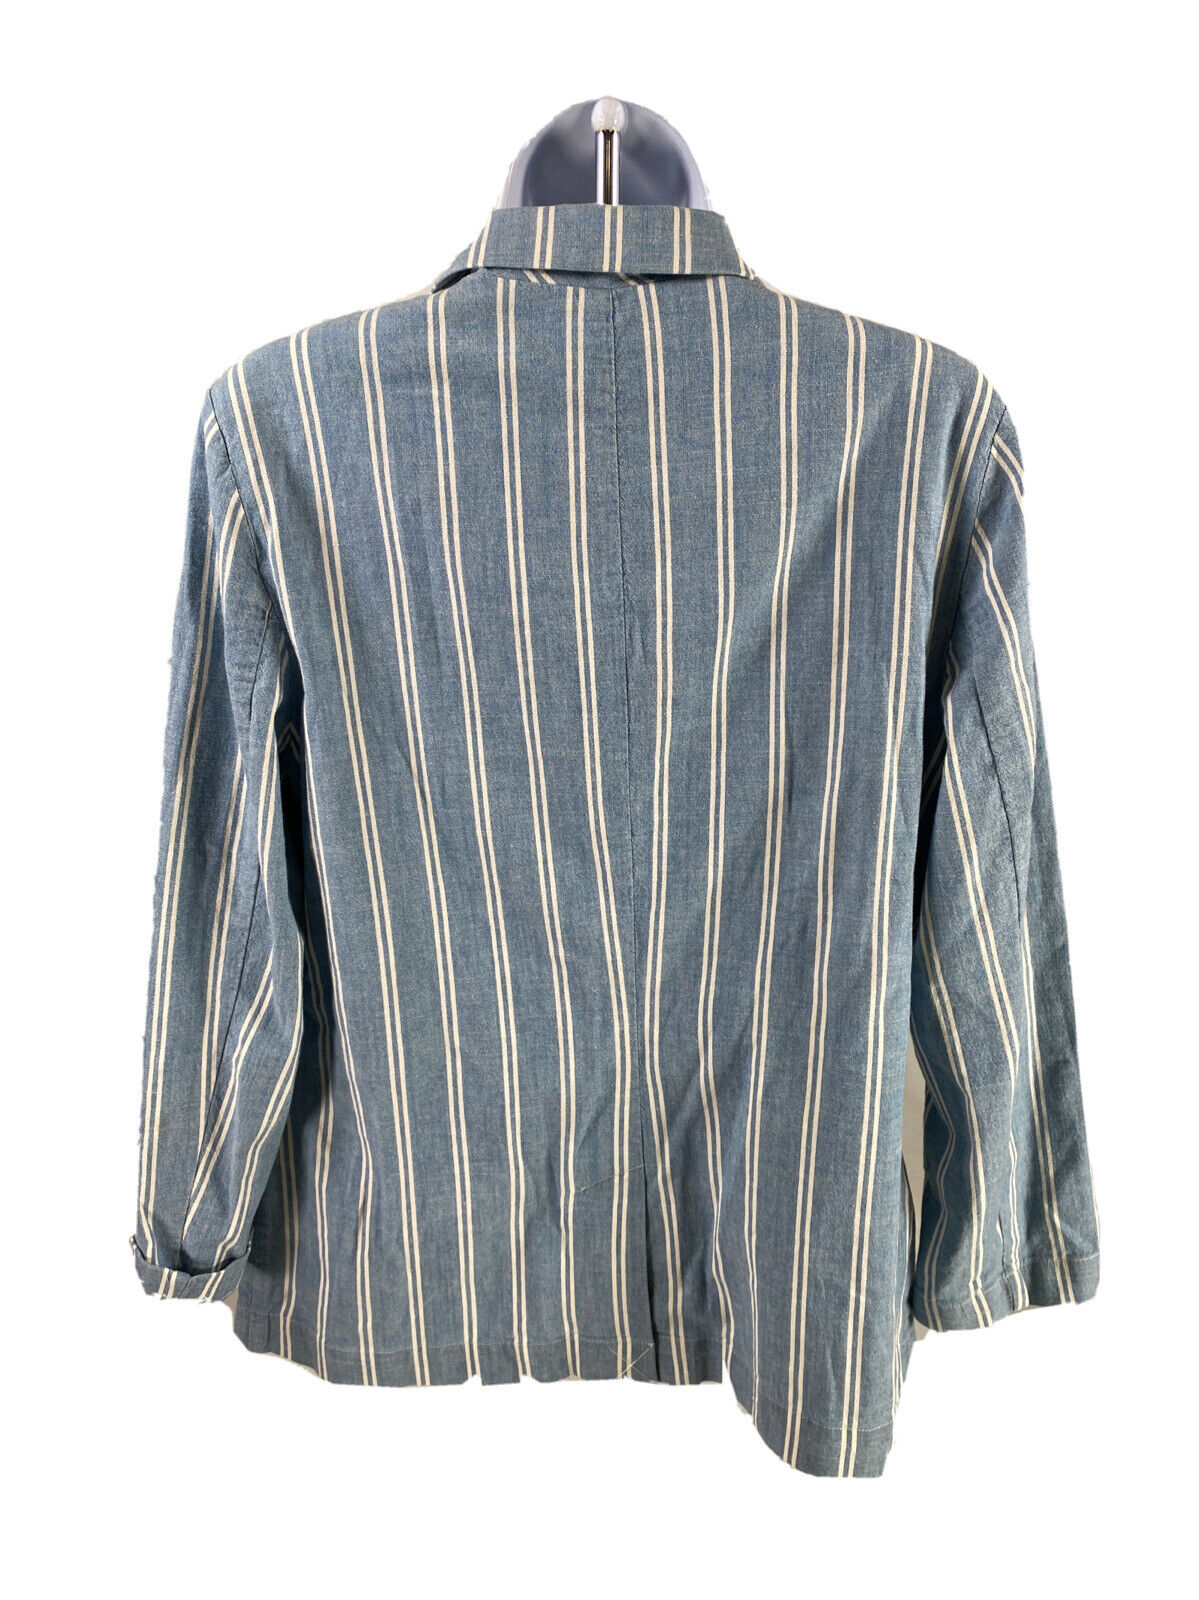 Chico's Women's Blue/White Striped Long Sleeve Blazer Jacket - 1 (US M)